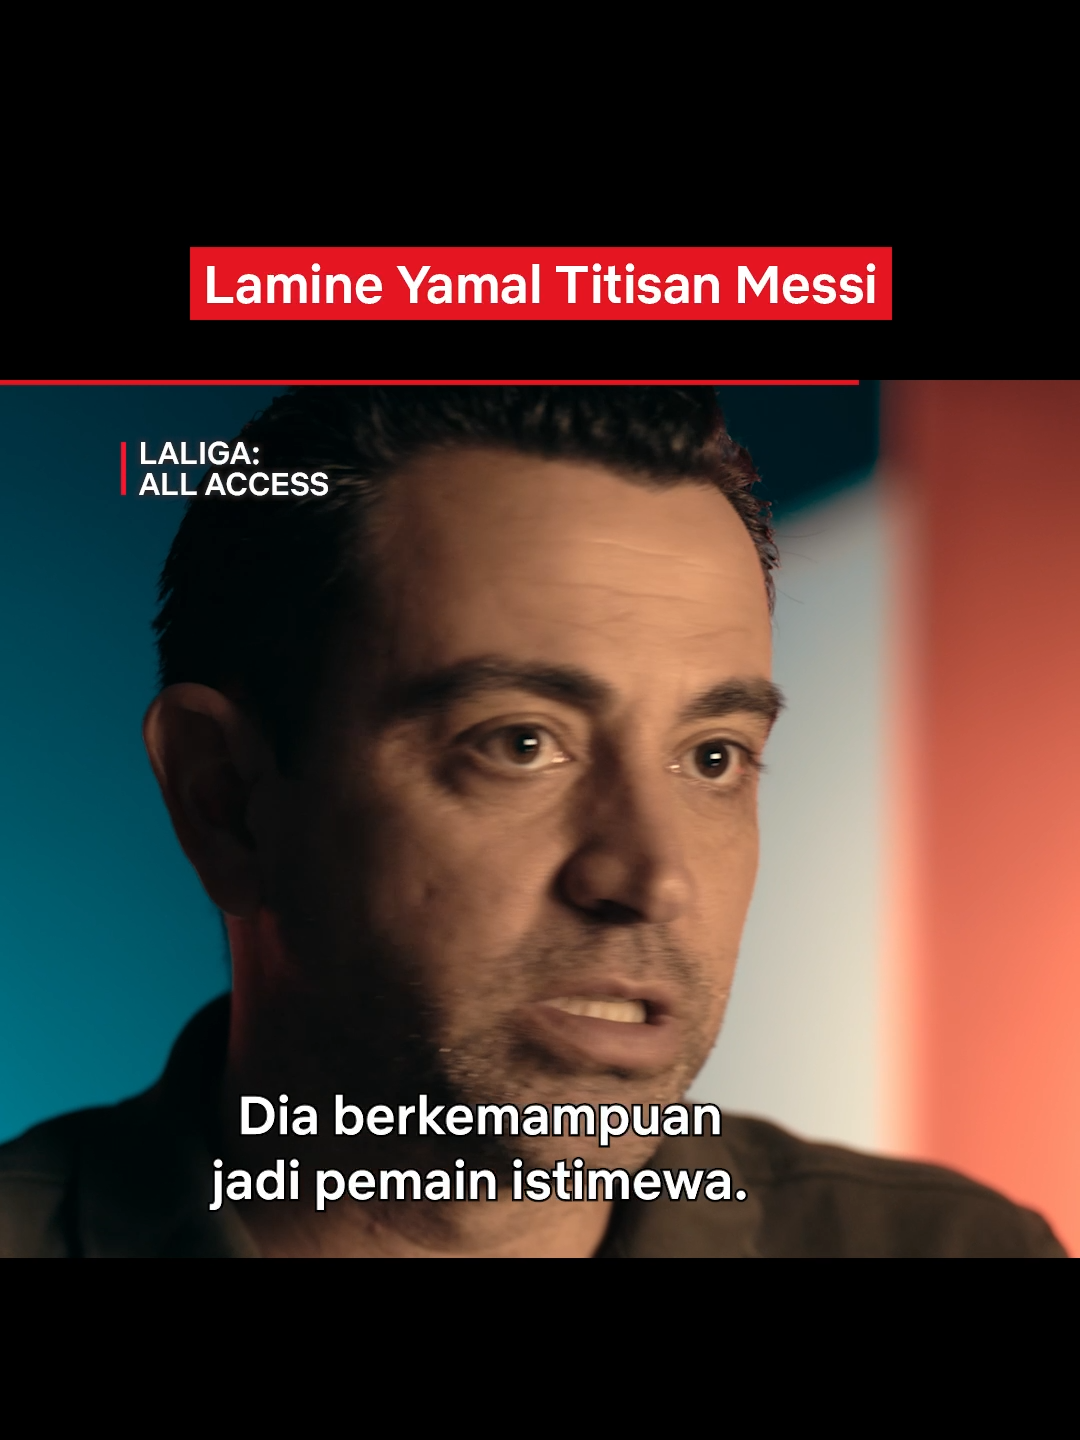 Apakah Yamal bakal jadi the next GOAT? 🐐 #Netflix #LALIGAAllAccess #LionelMessi #LamineYamal #Barcelona